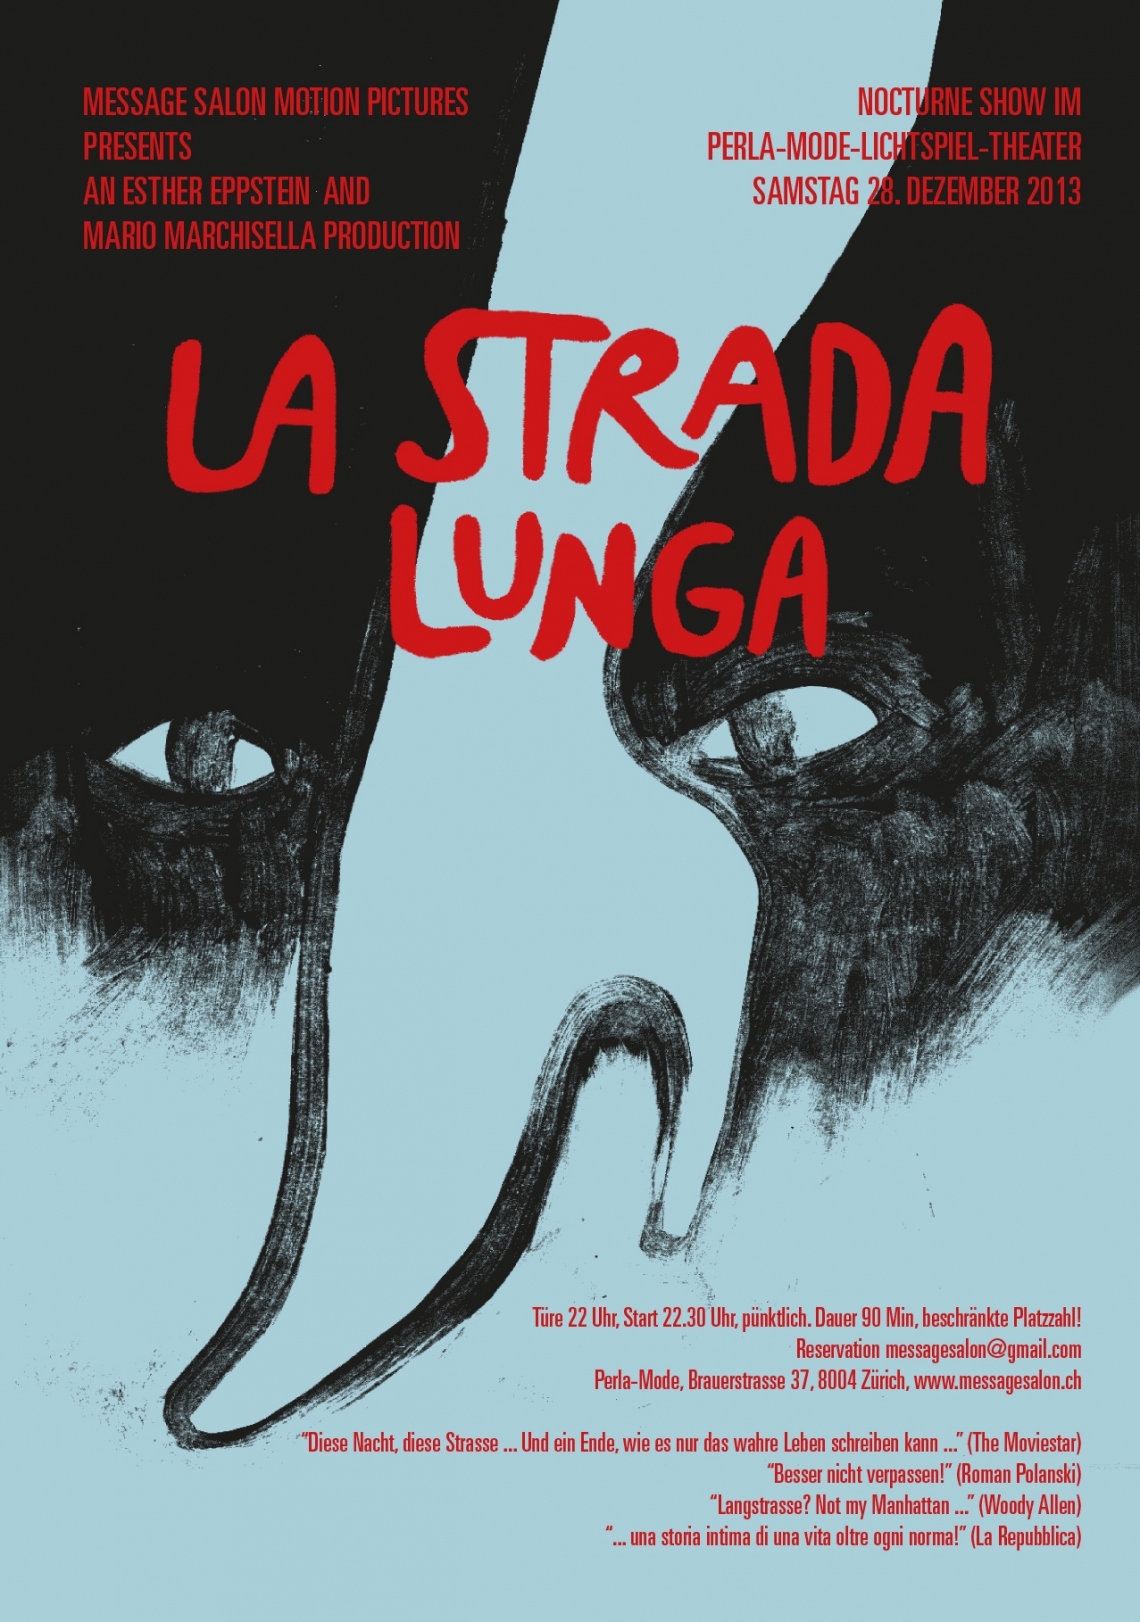 Die letzte Show! 
La Strada Lunga, Samstag 28. Dezember Perla-Mode
Poster: Zuni Halpern